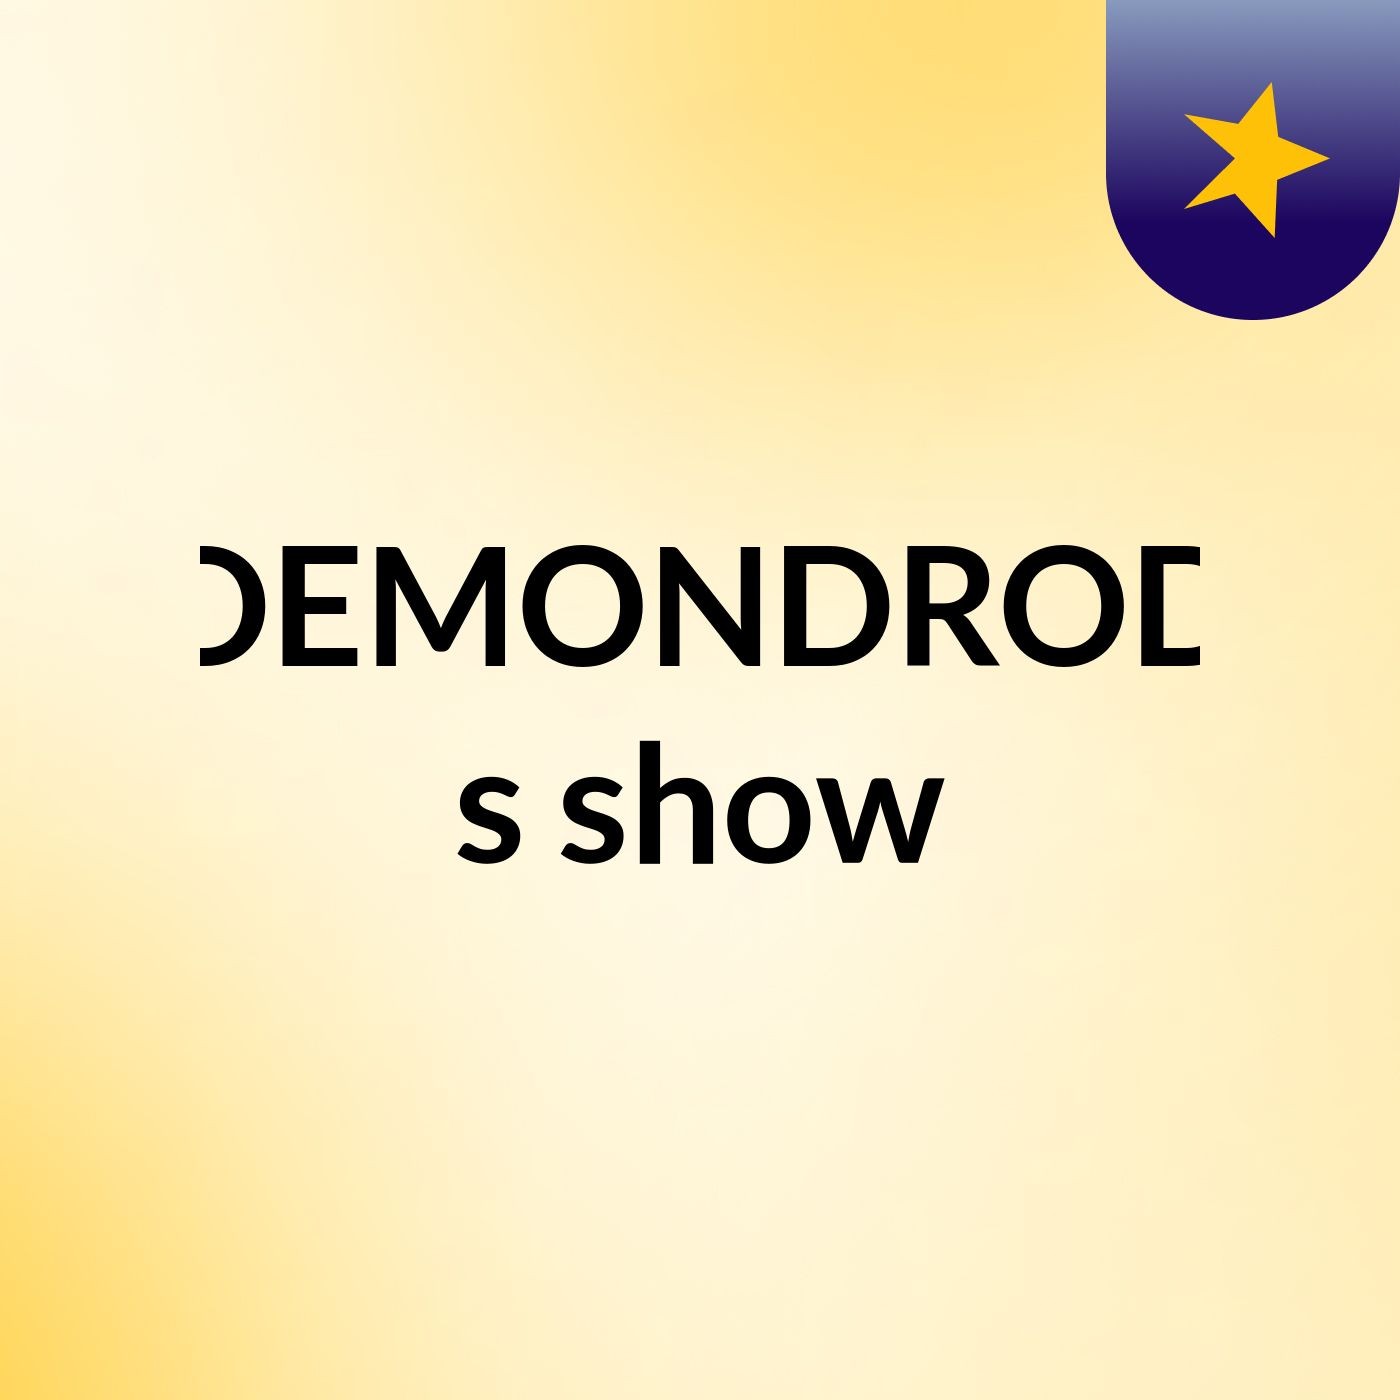 DEMONDROD's show